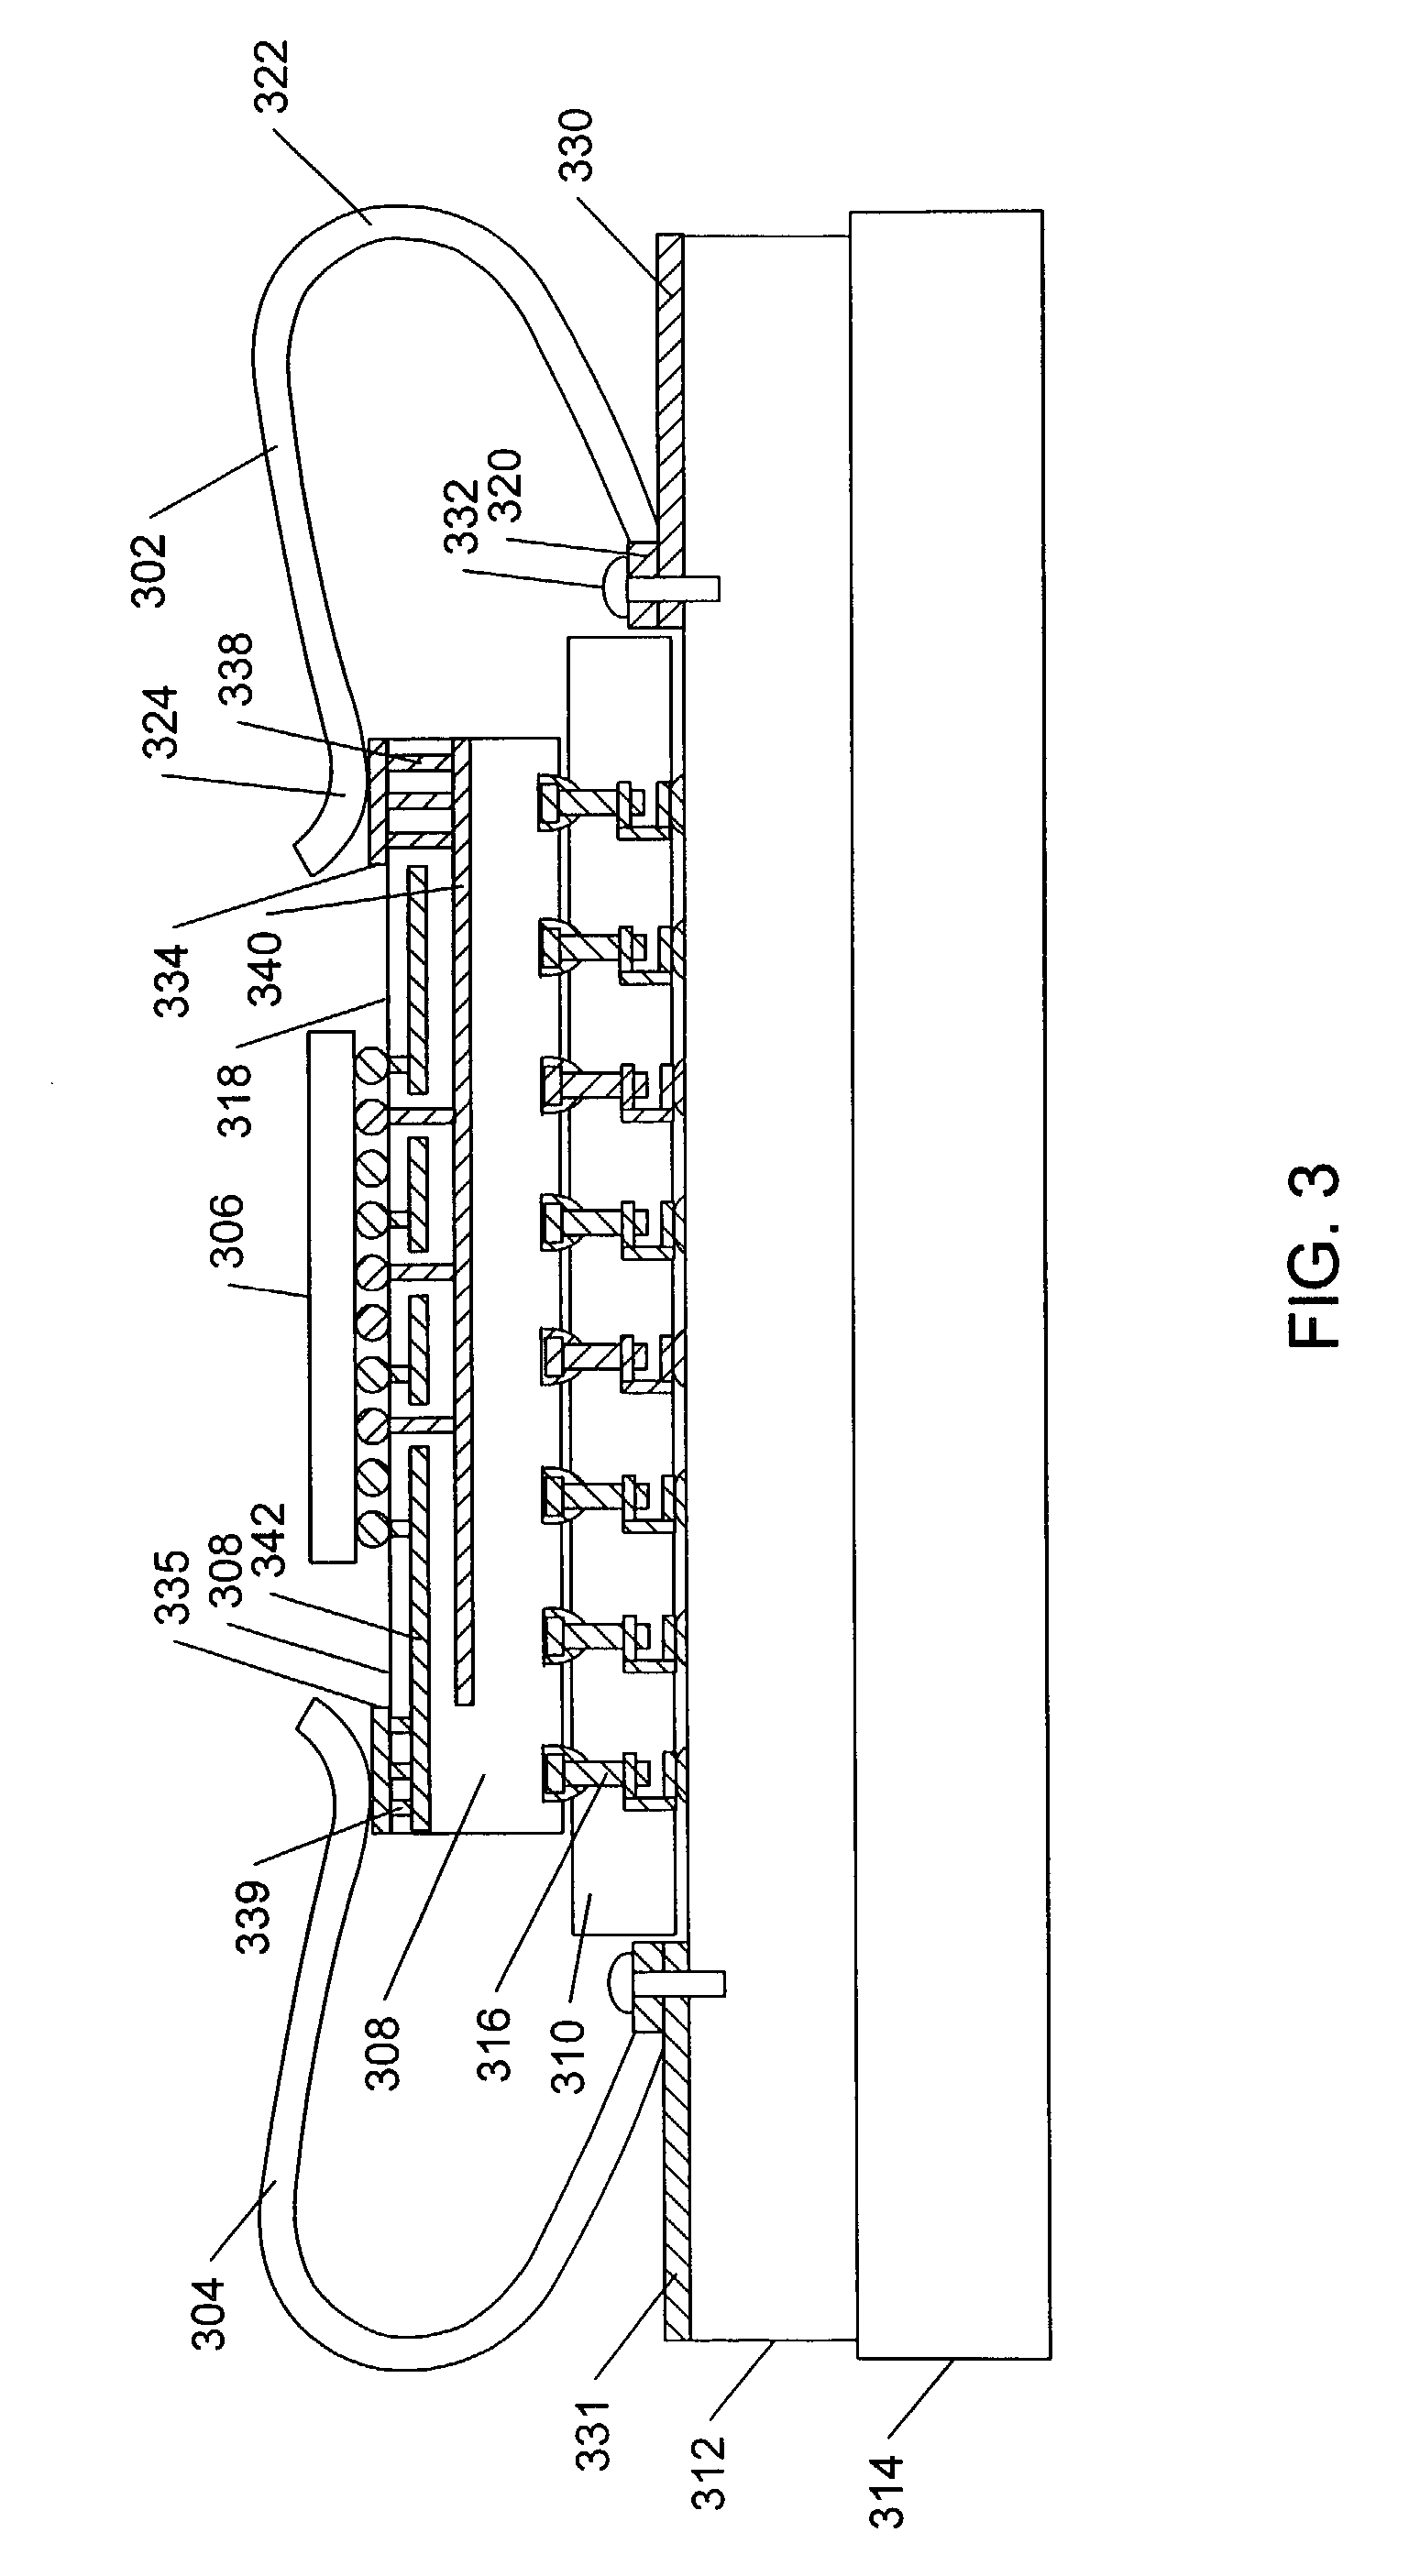 Printed circuit board housing clamp